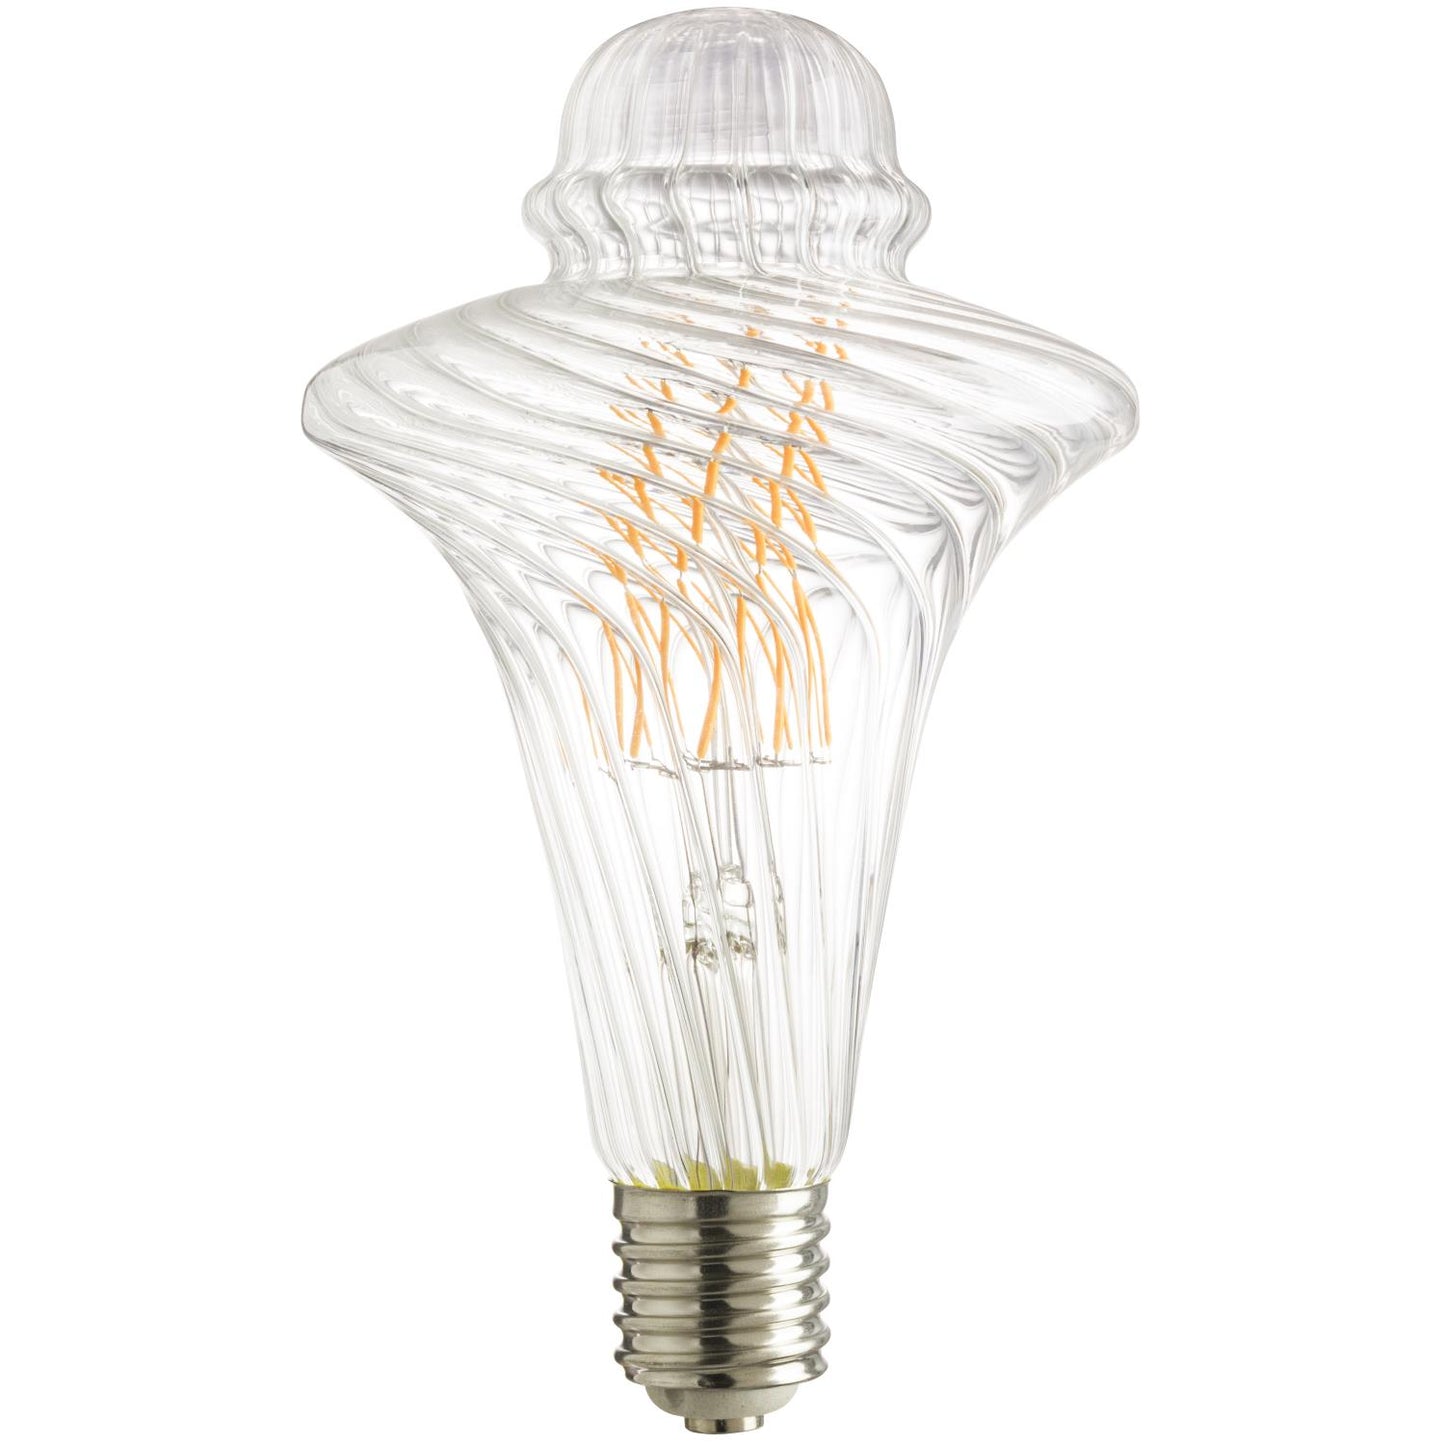 Sunlite LED Vintage Chimney 12W (100W Equivalent) Light Bulb Mogul (E39) Base, Warm White